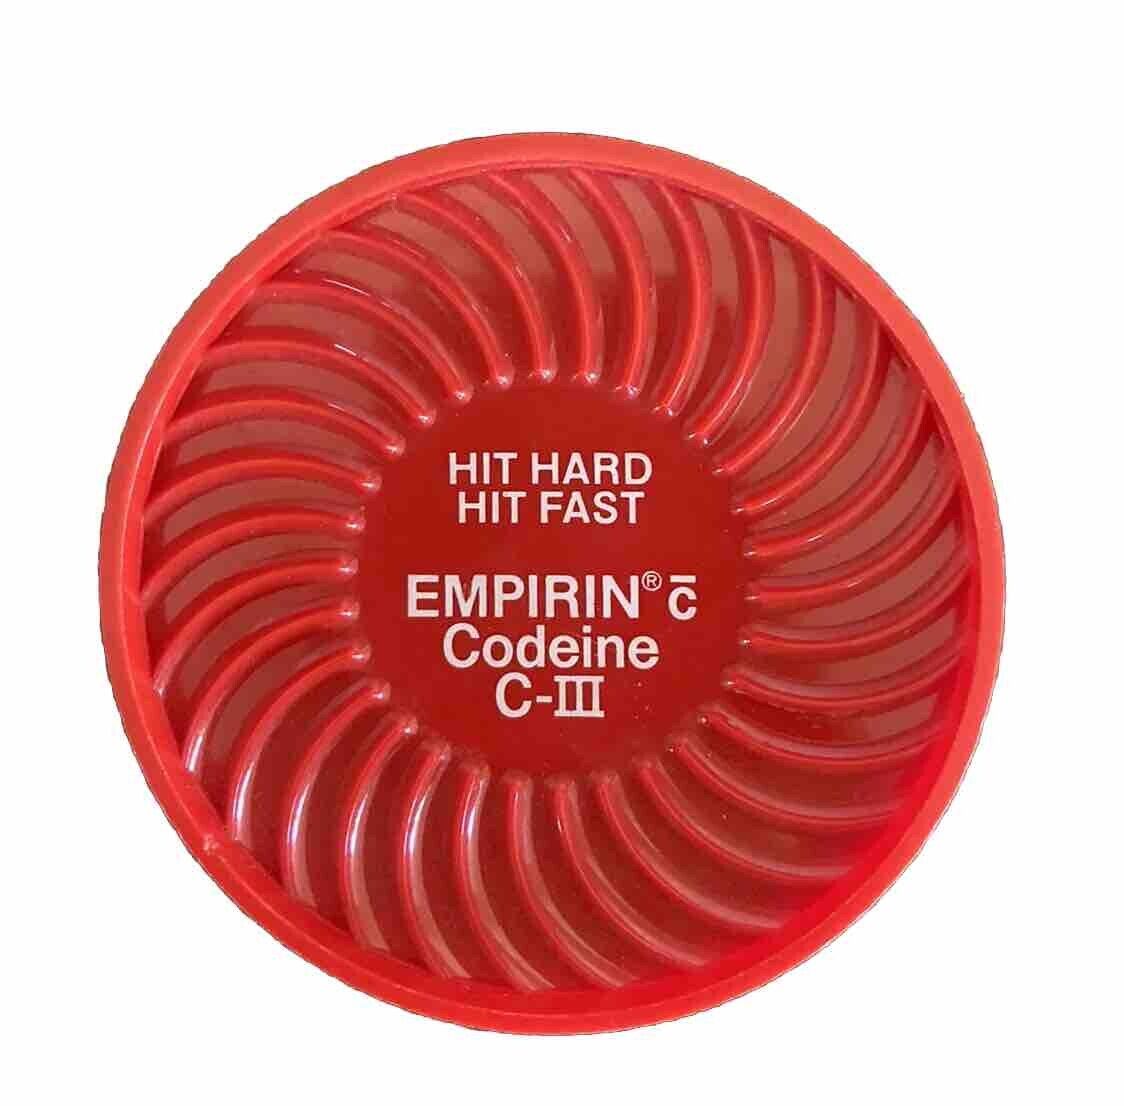 Pharmaceutical Drug Rep Collectibles Vintage Coaster Empirin Codeine C-III